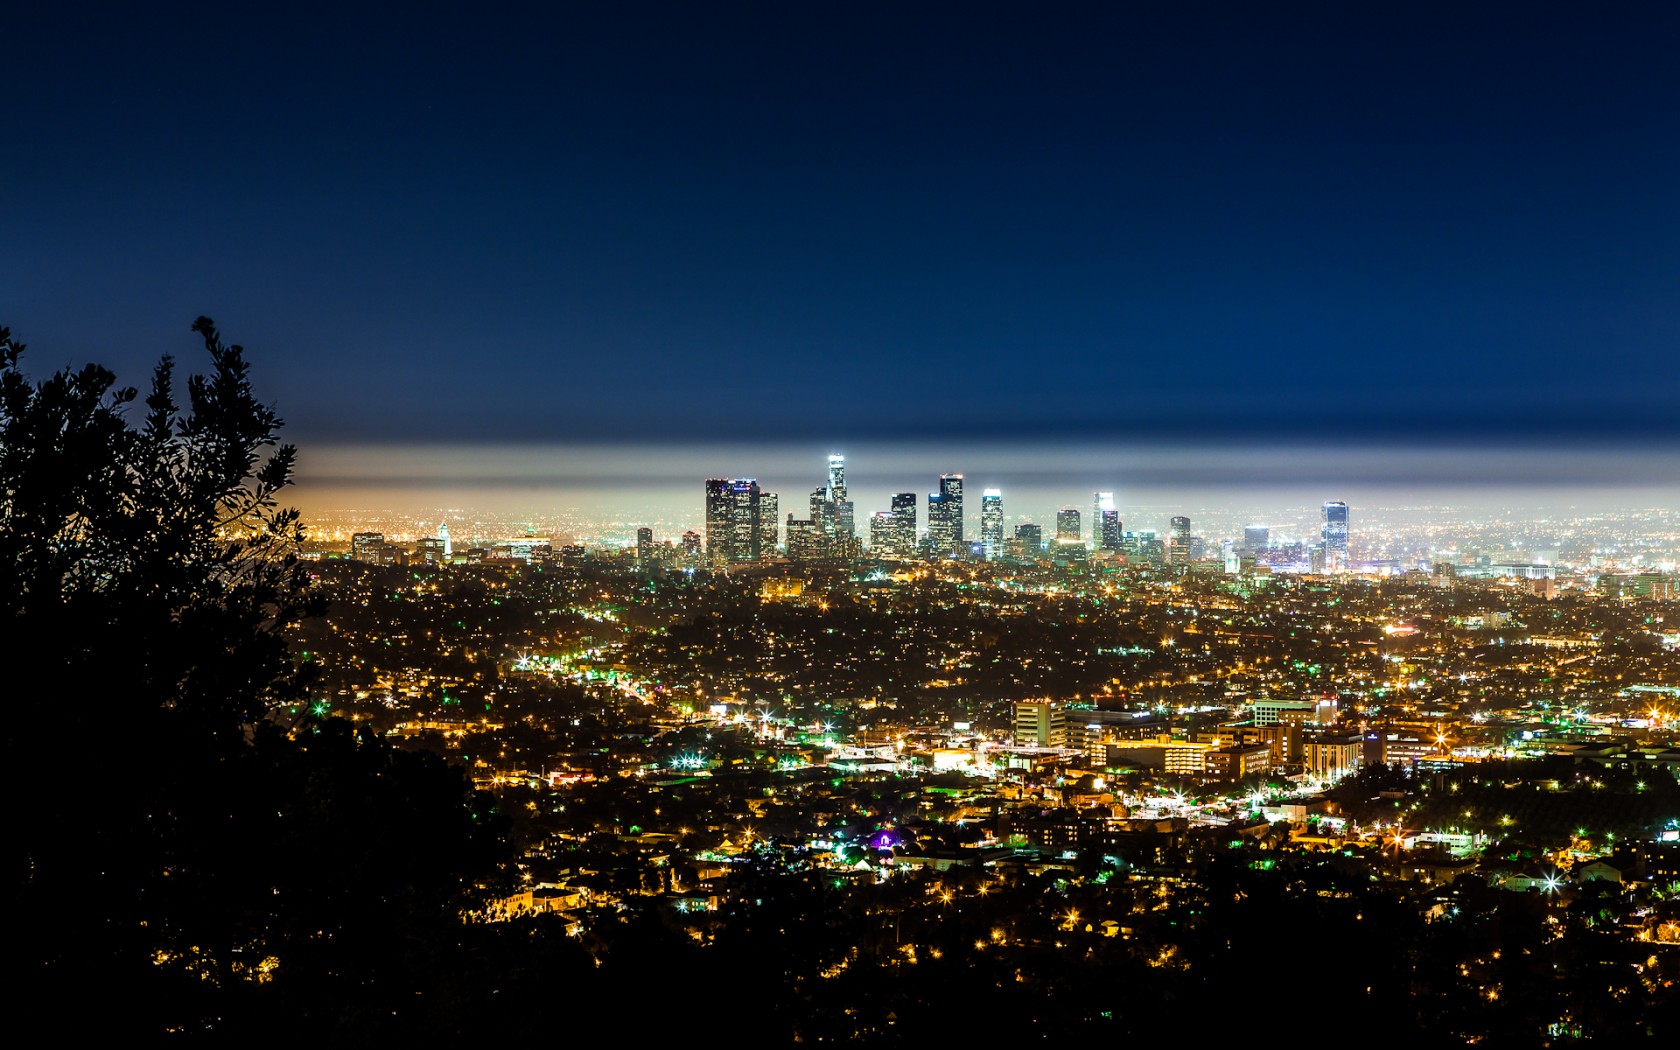 USA California Los Angeles cities night lights hdr sky cityscape